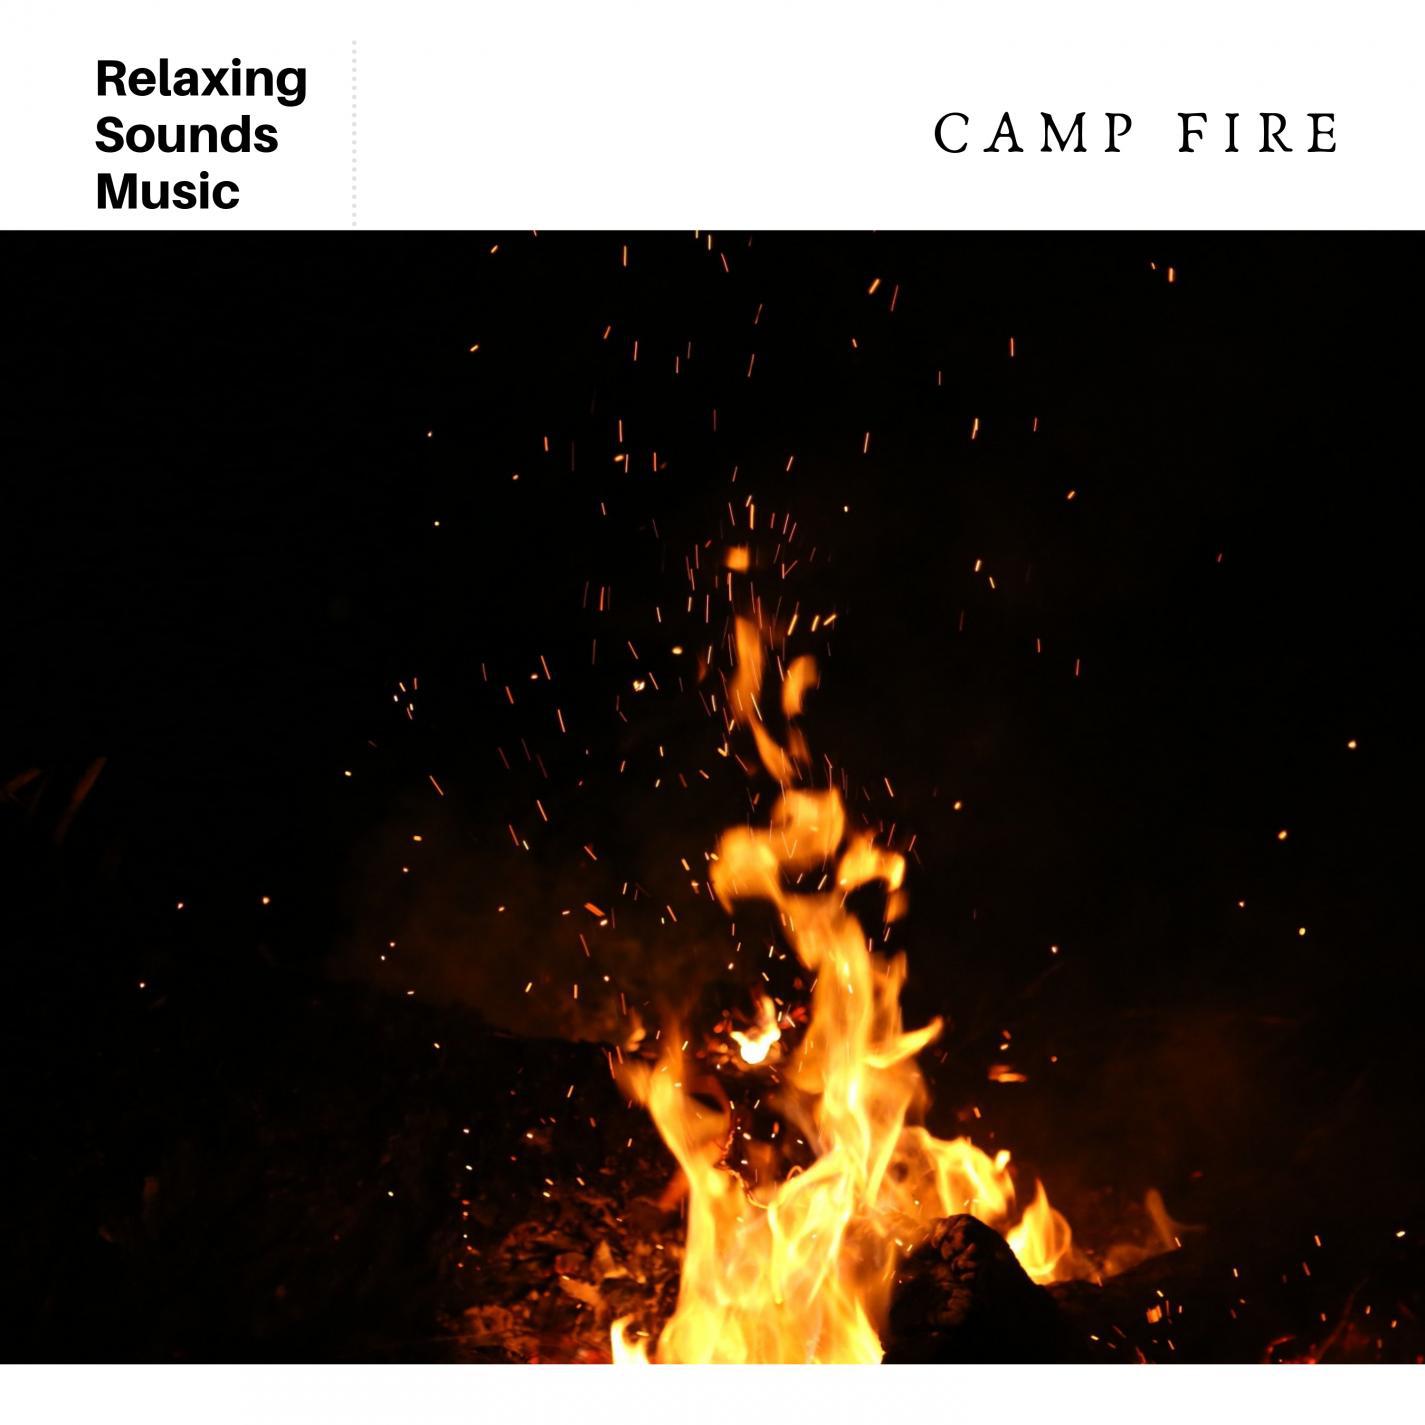 Nature Campfire